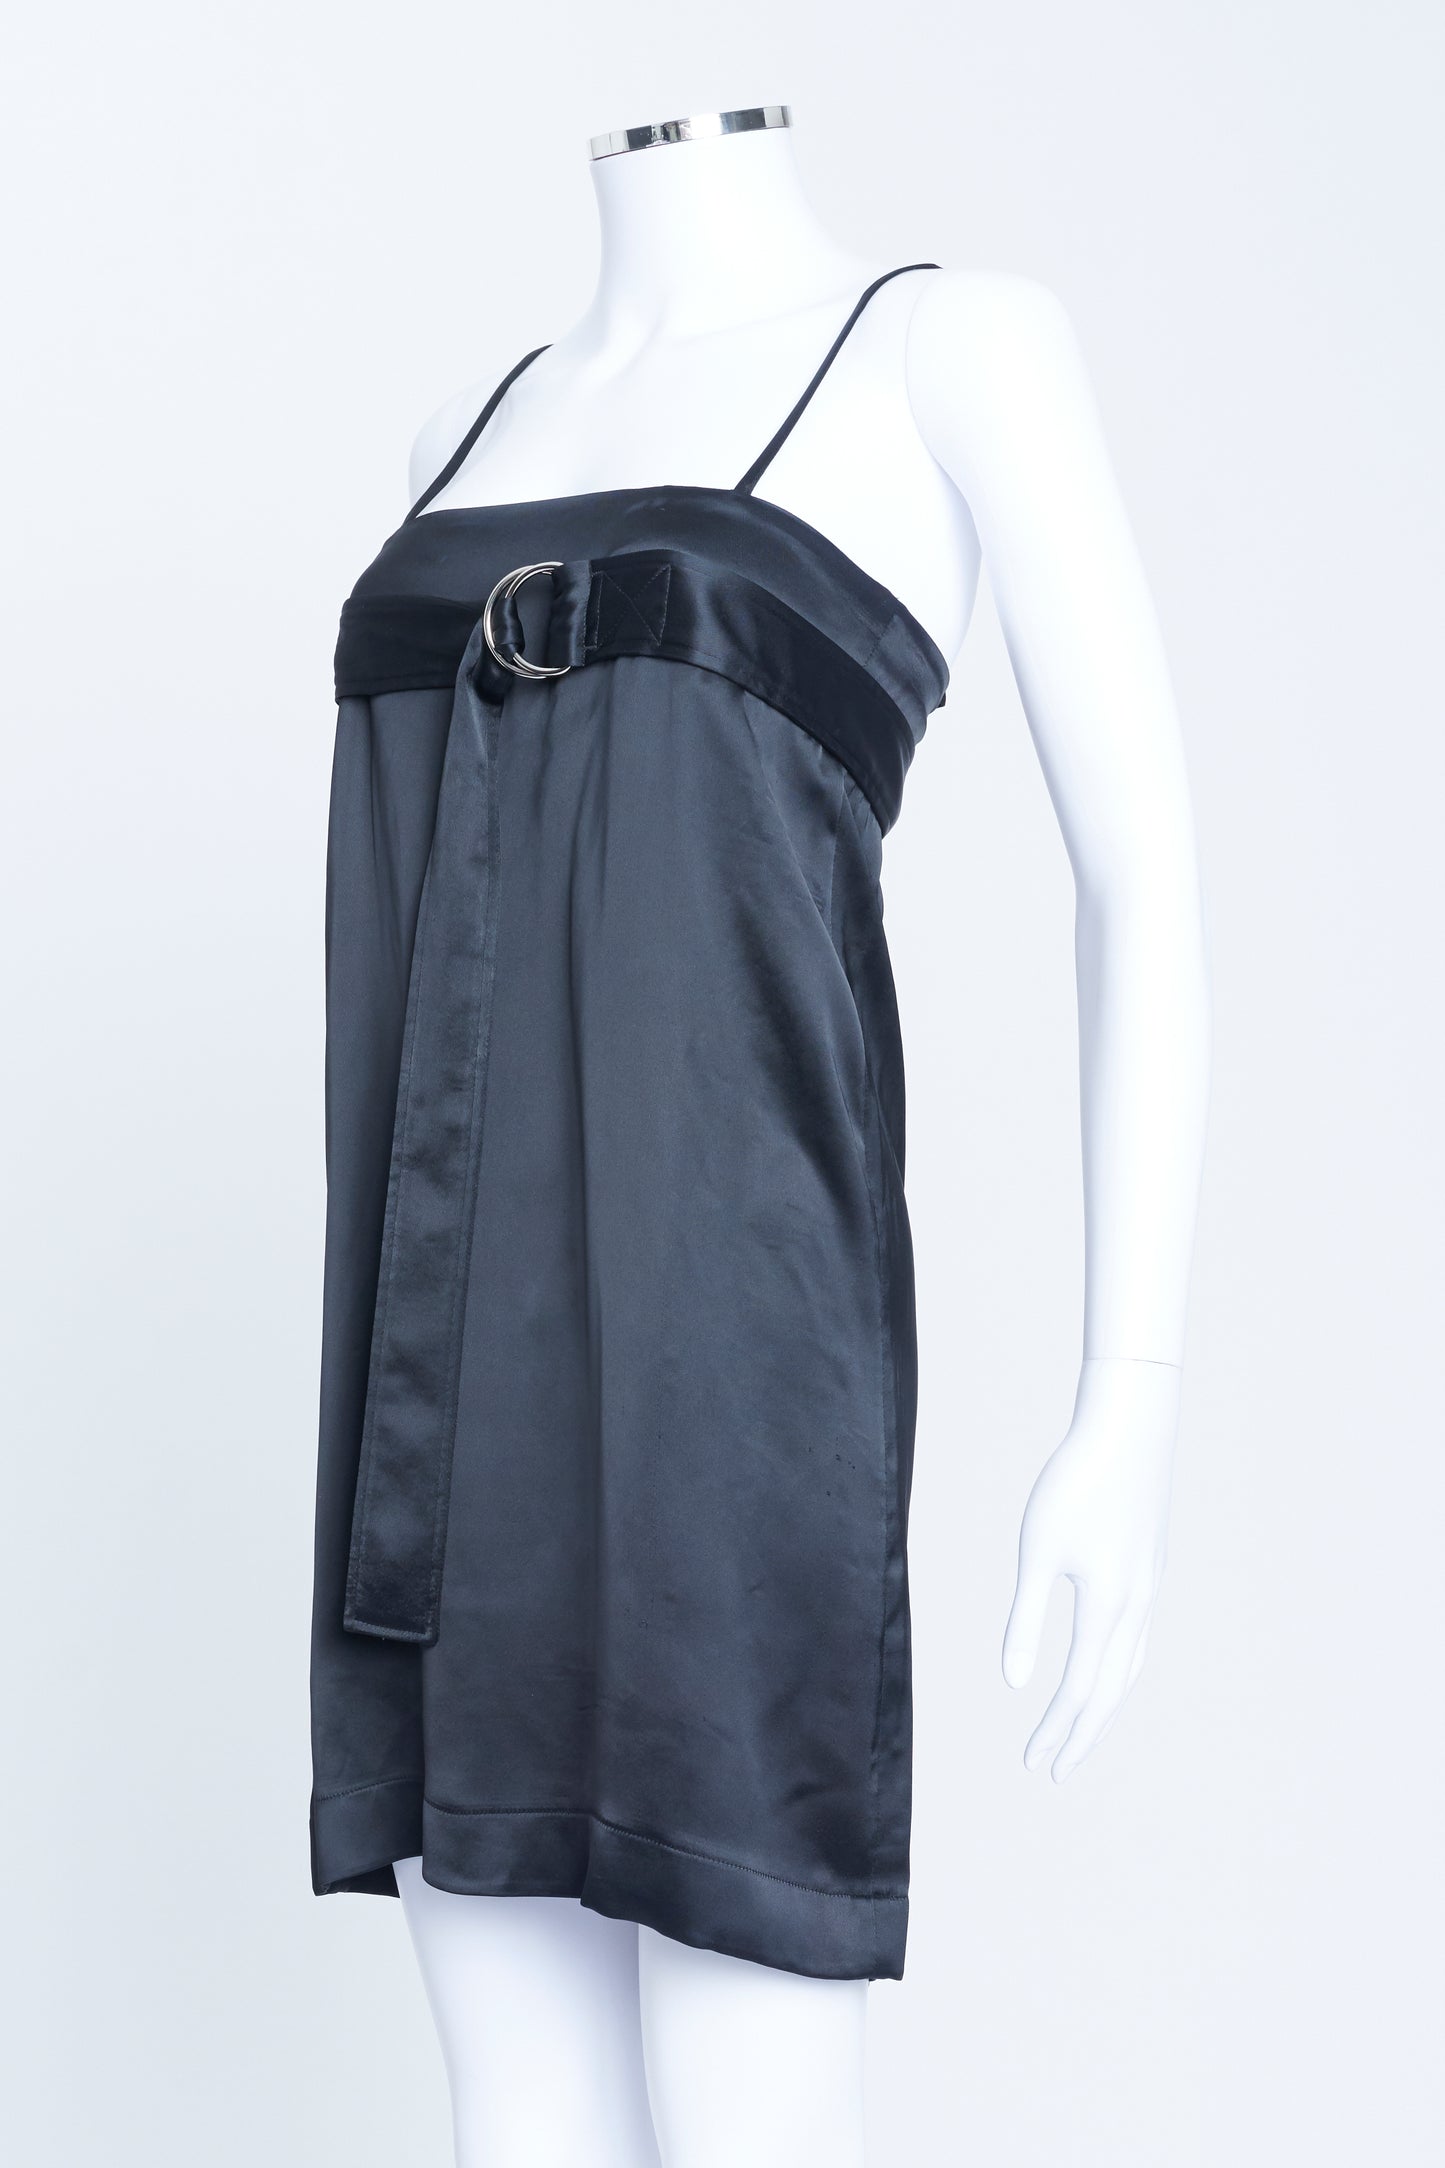 Black Satin Effect Mini Dress with D-Ring Belt